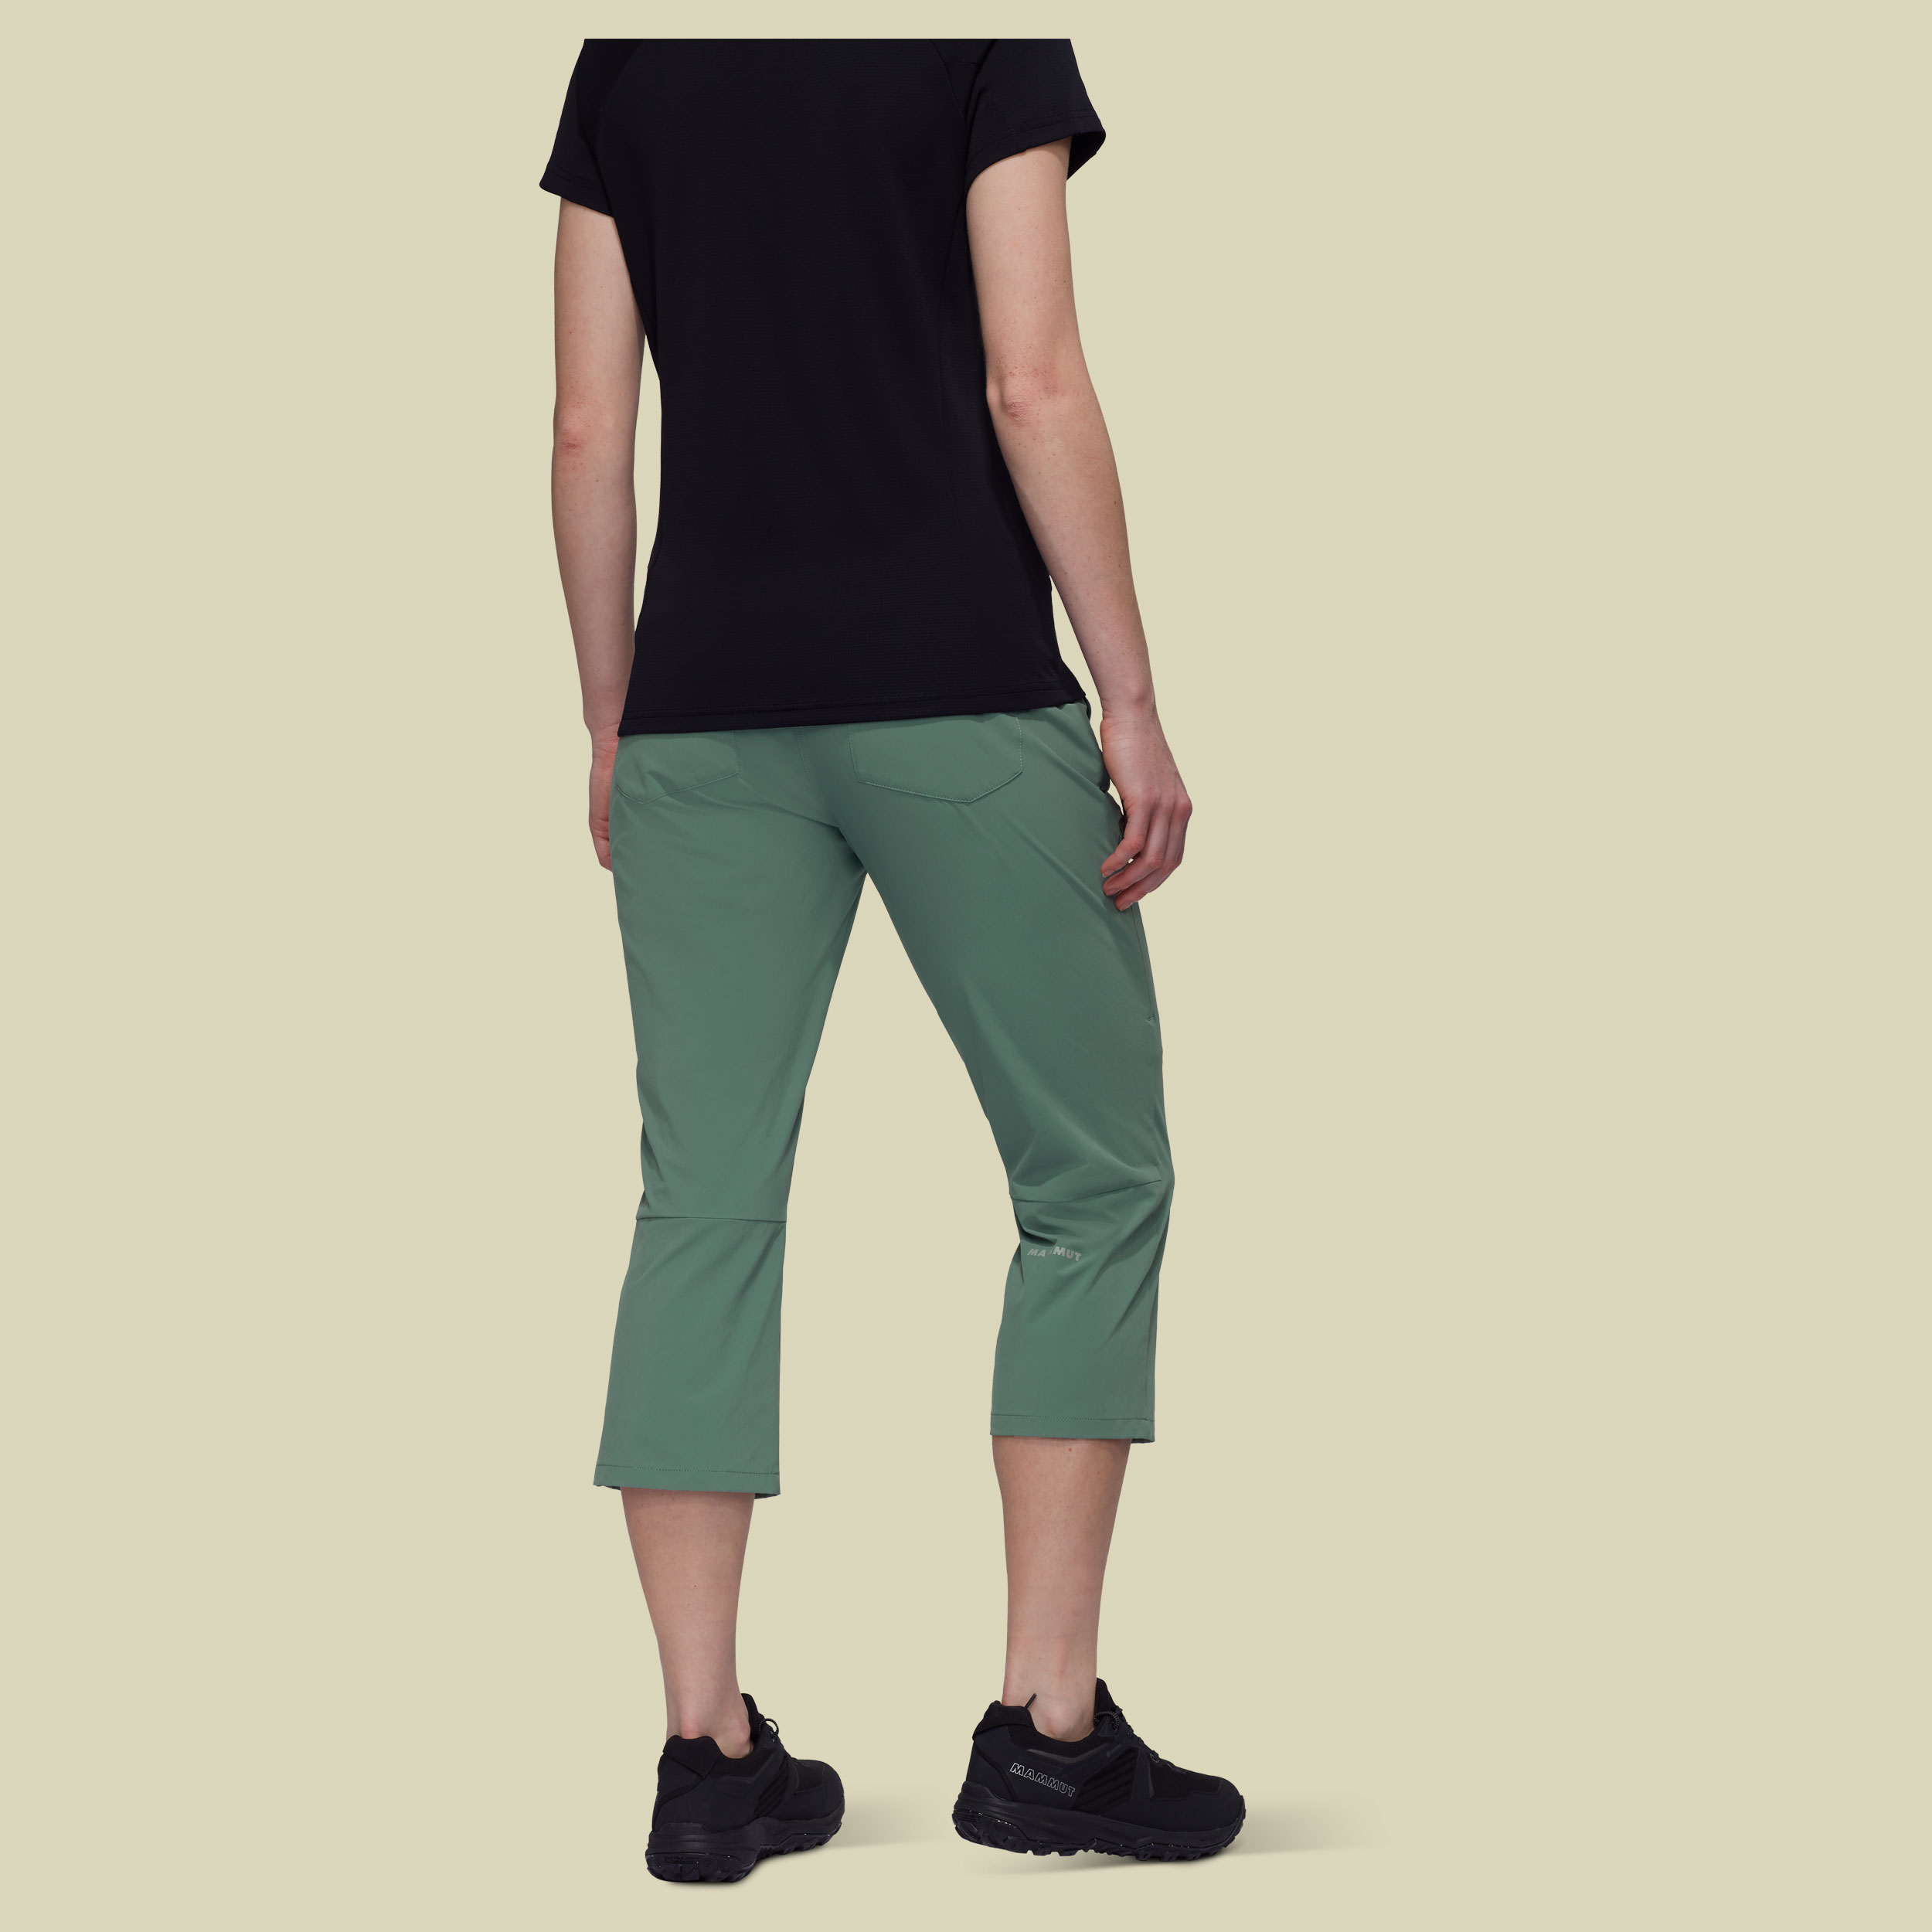 Runbold Capri Pants Women grün 40 - dark jade